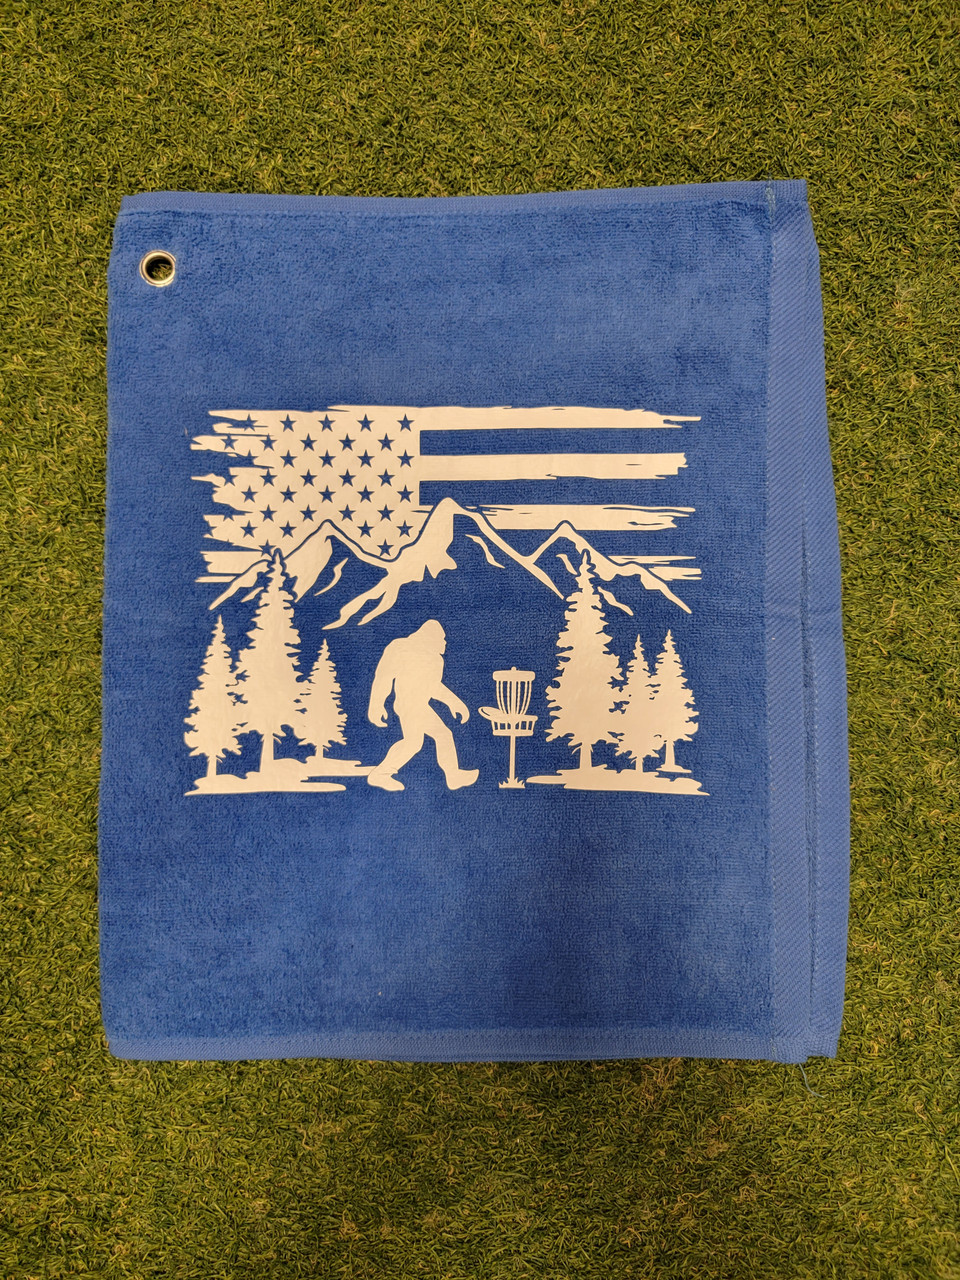 Carbella Designs Towel Sasquatch Flag White on Blue